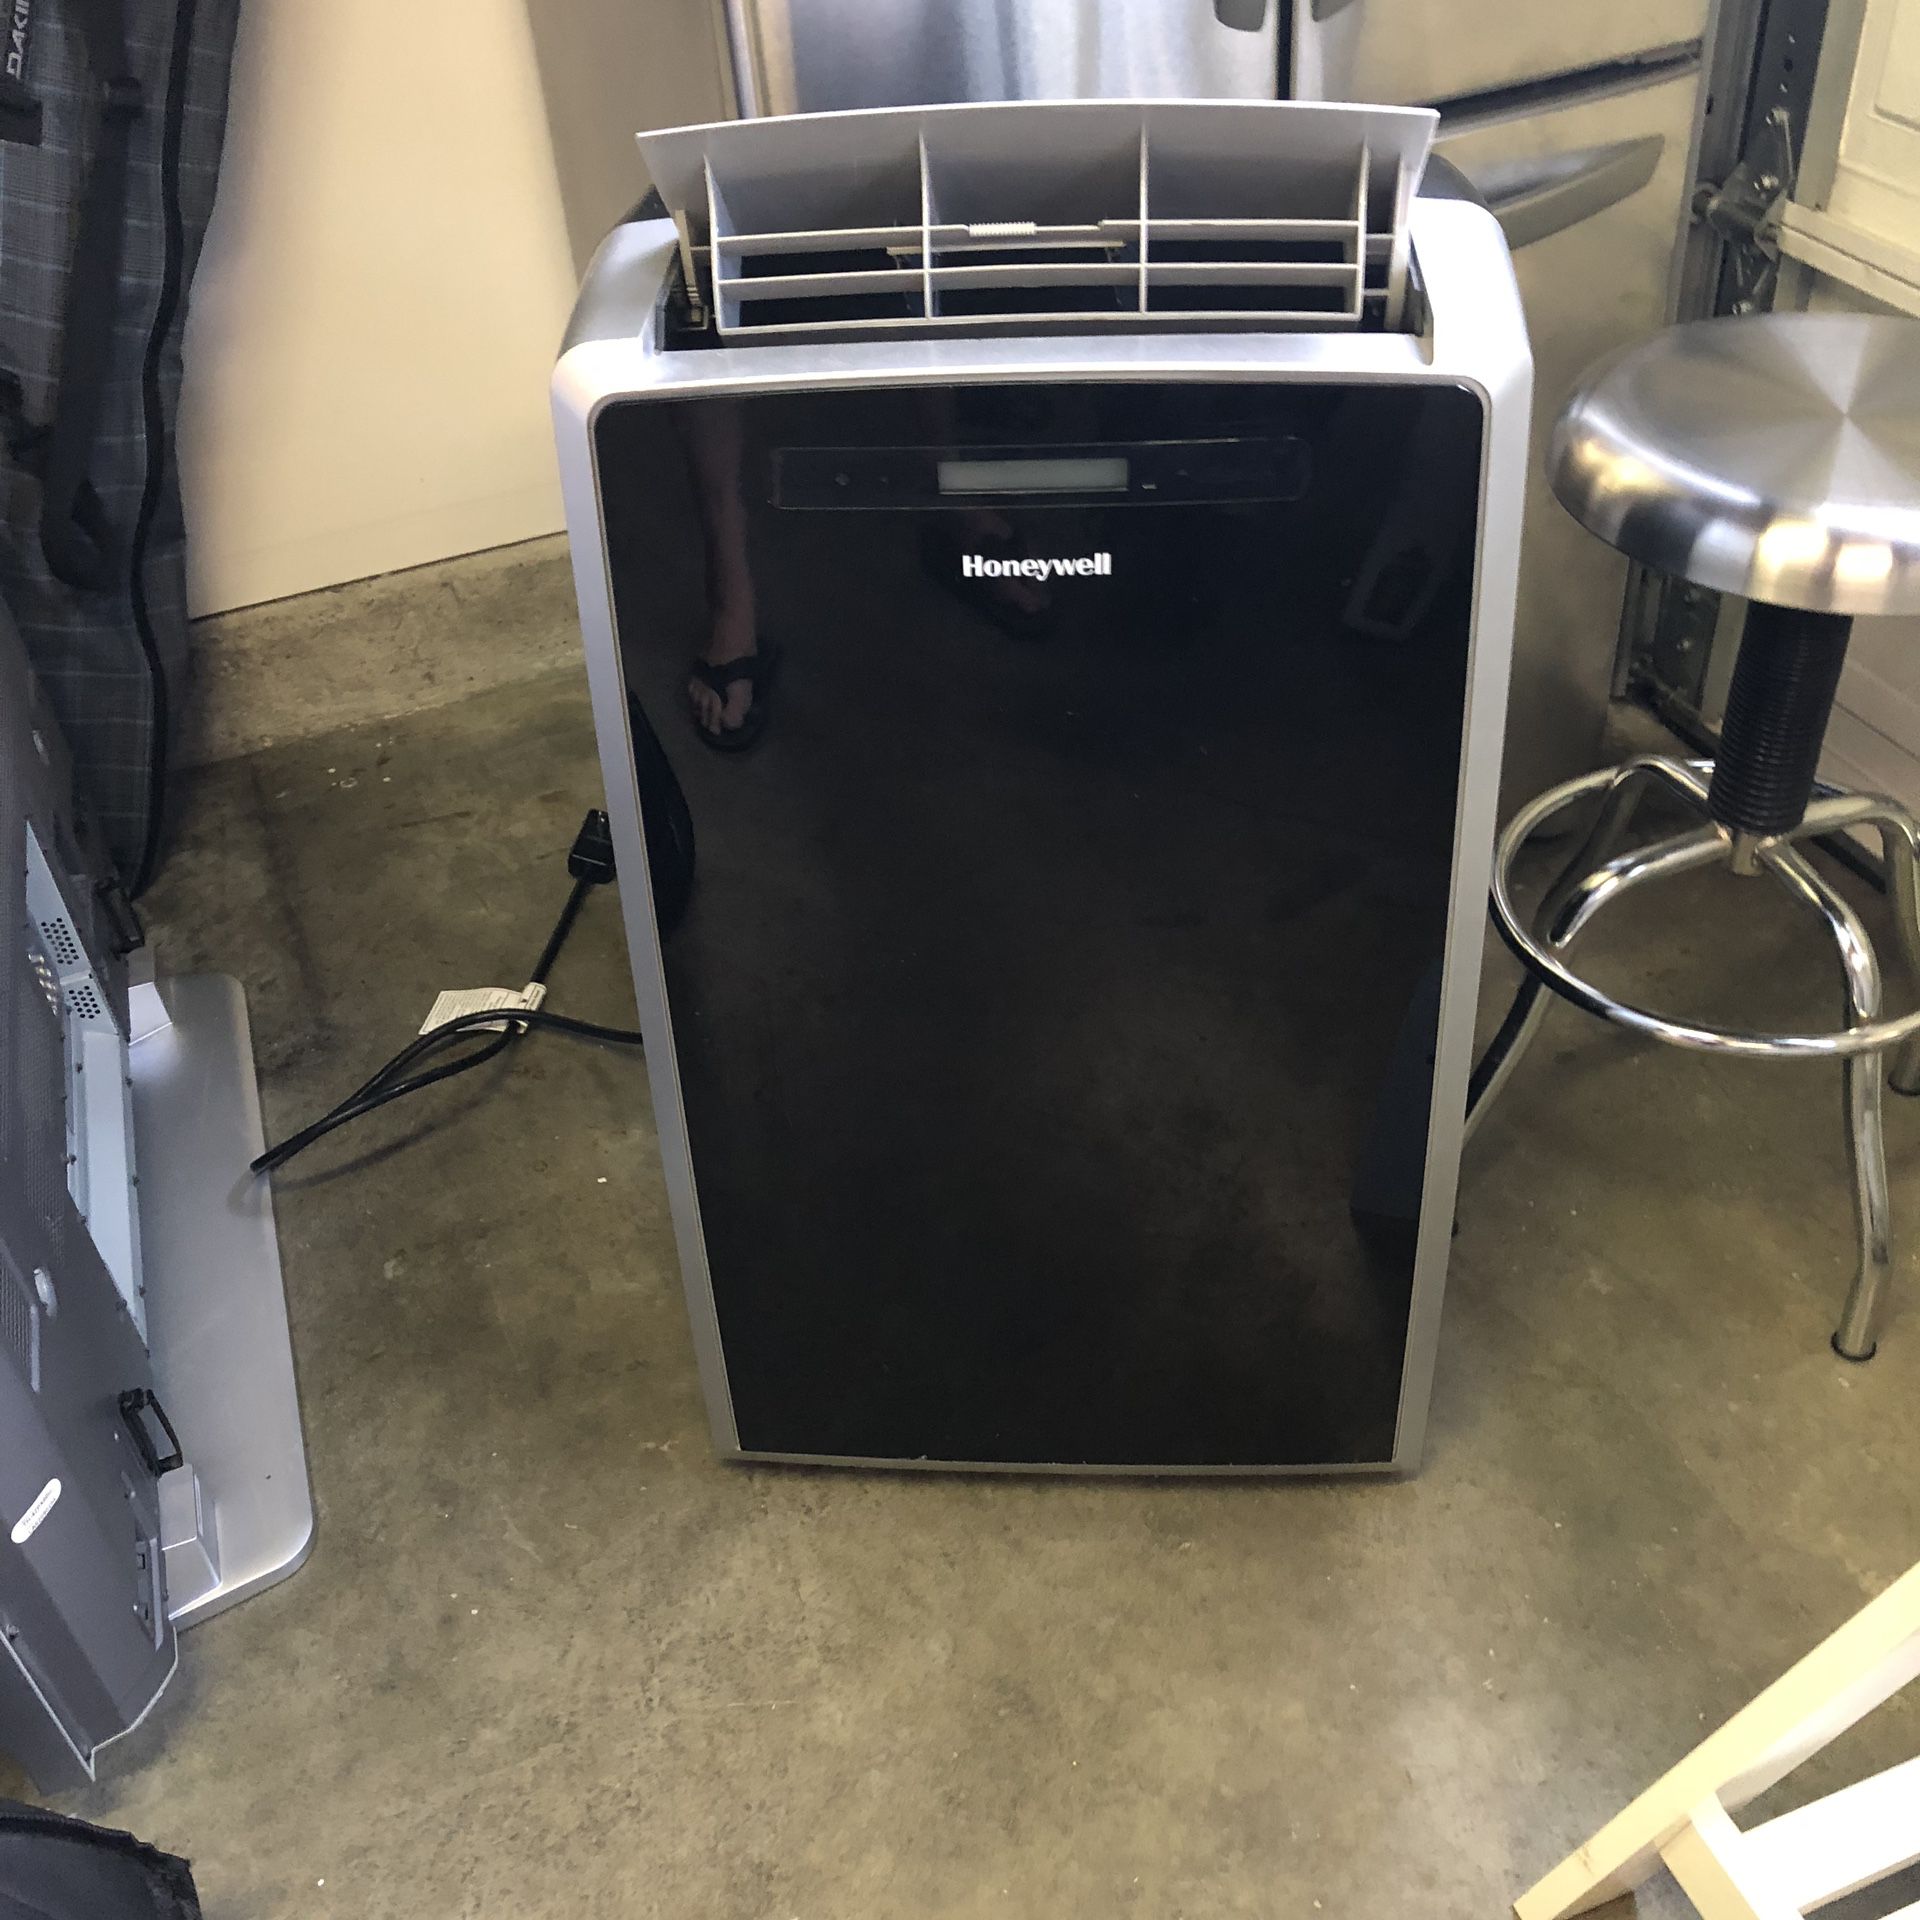 Honeywell Portable Air Conditioning, heating, fan, dehumidifier (14,000 BTU)